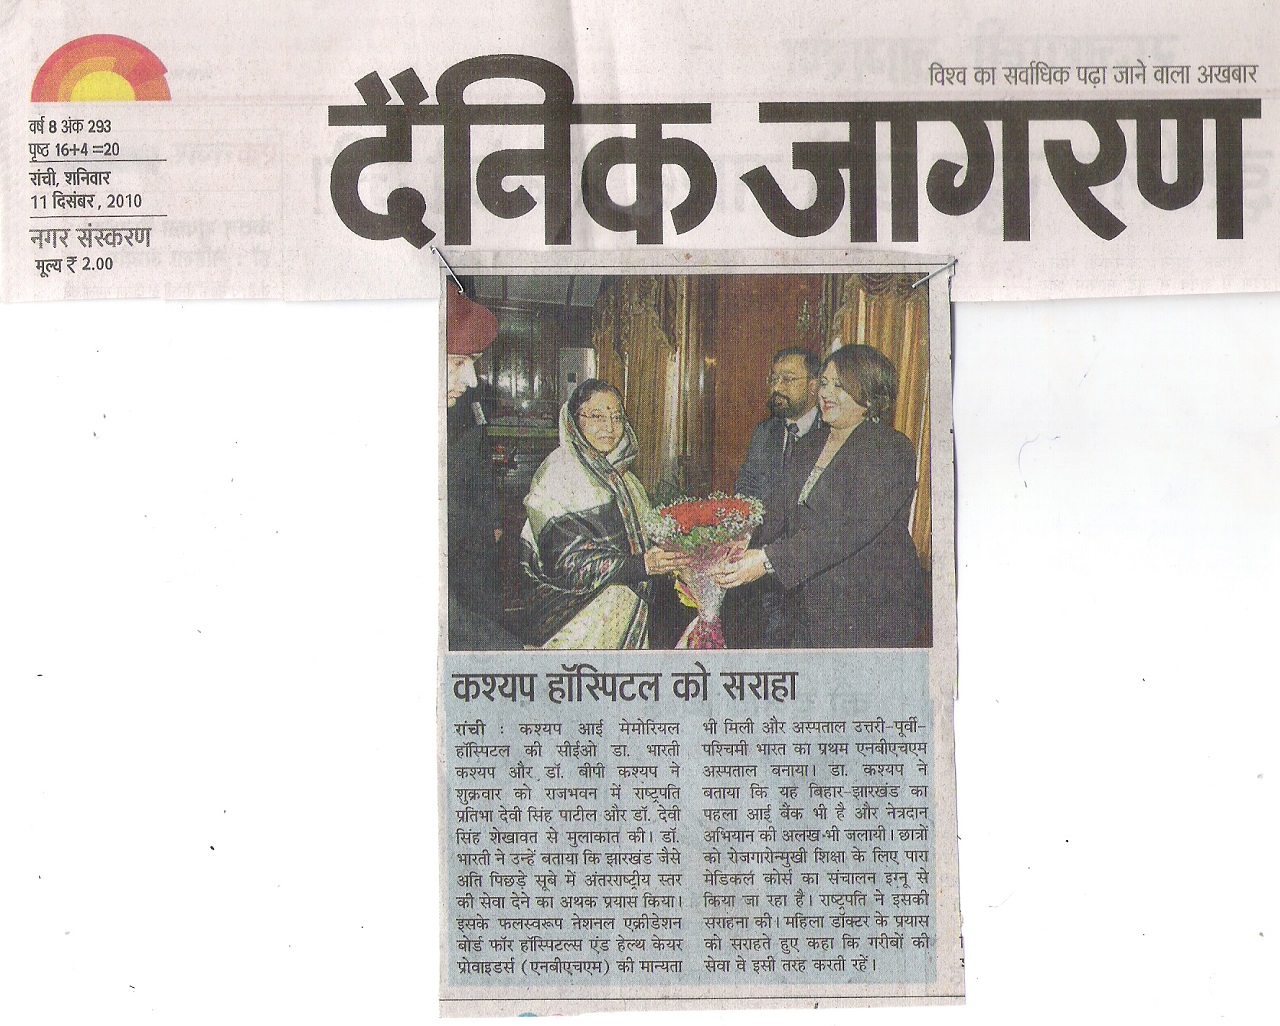 Dr. Bharti Kashyap:  Award By The President Hon’ble Mrs. Pratibha Patil